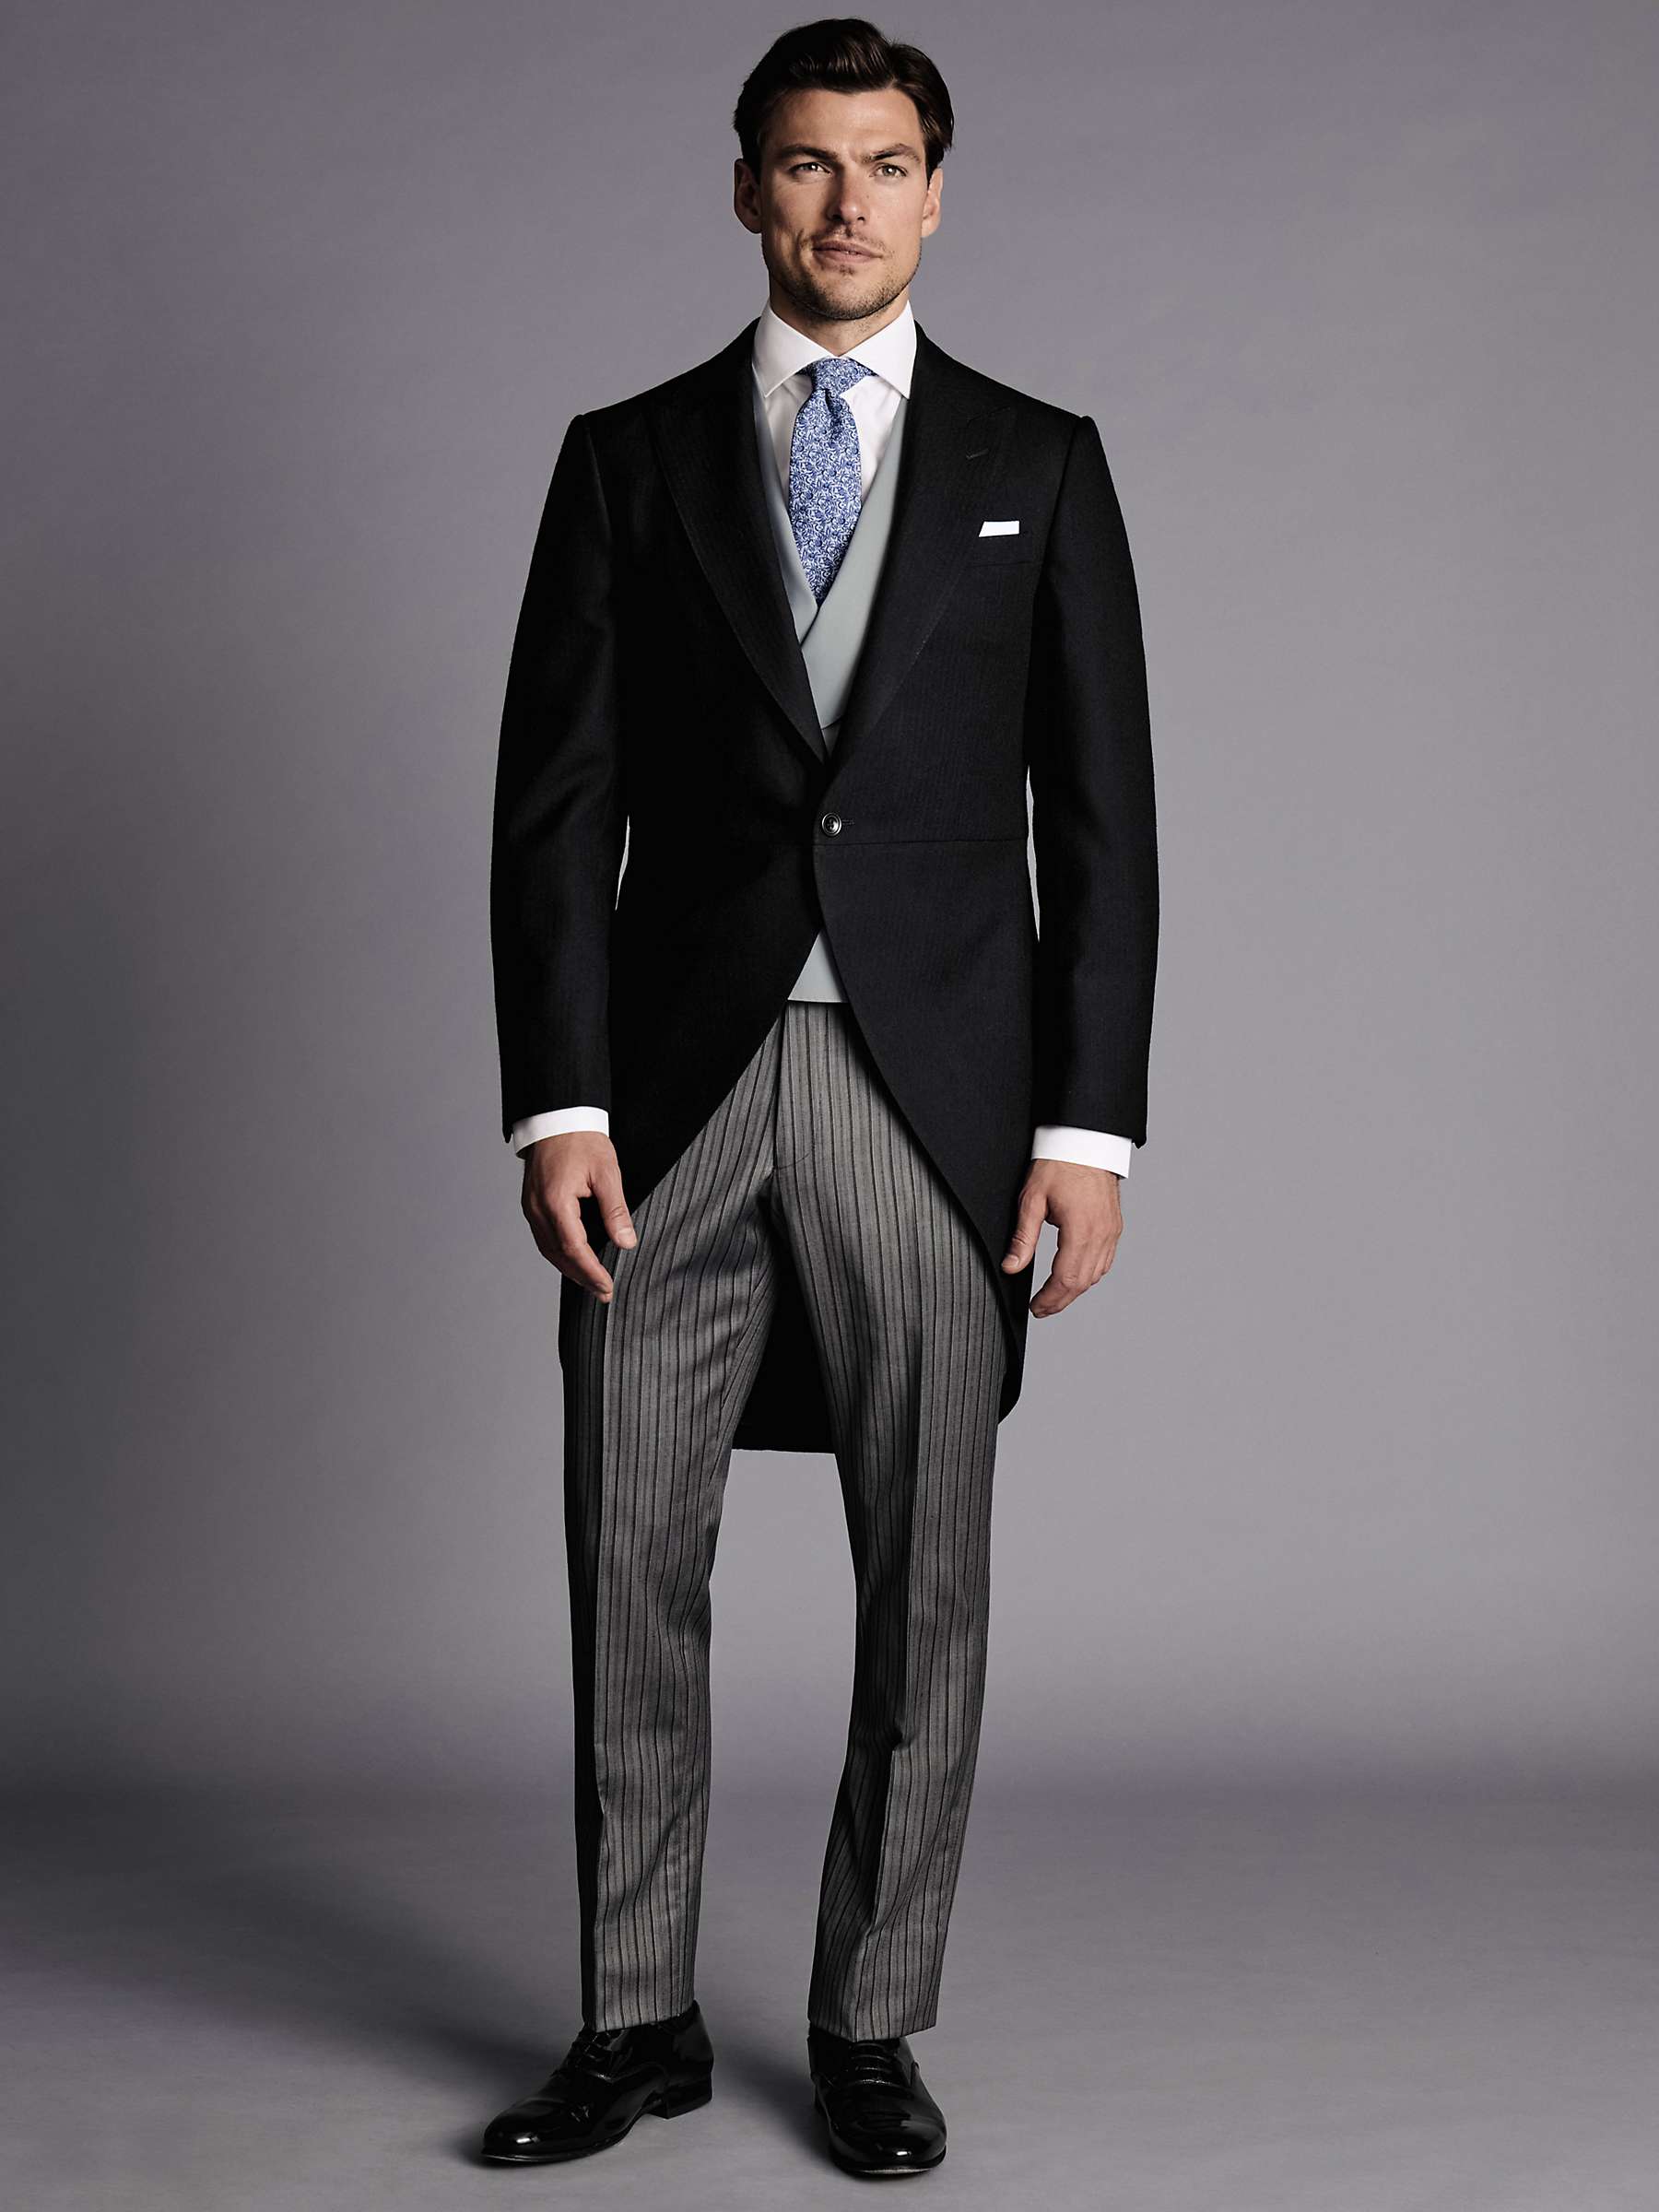 Buy Charles Tyrwhitt Morning Stripe Slim Fit Suit Trousers Online at johnlewis.com